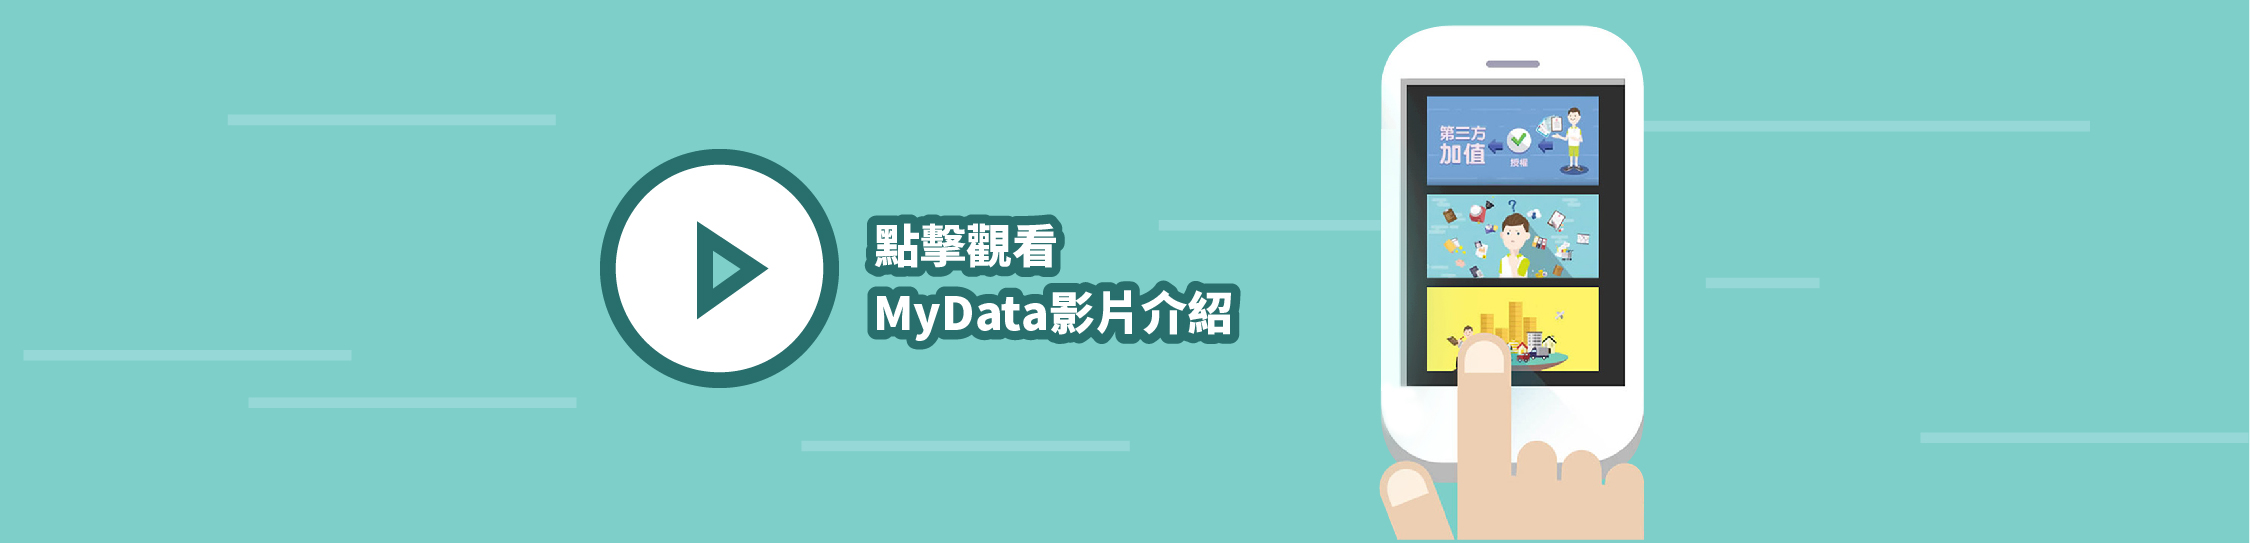 MyData個人化資料自主運用介紹影片